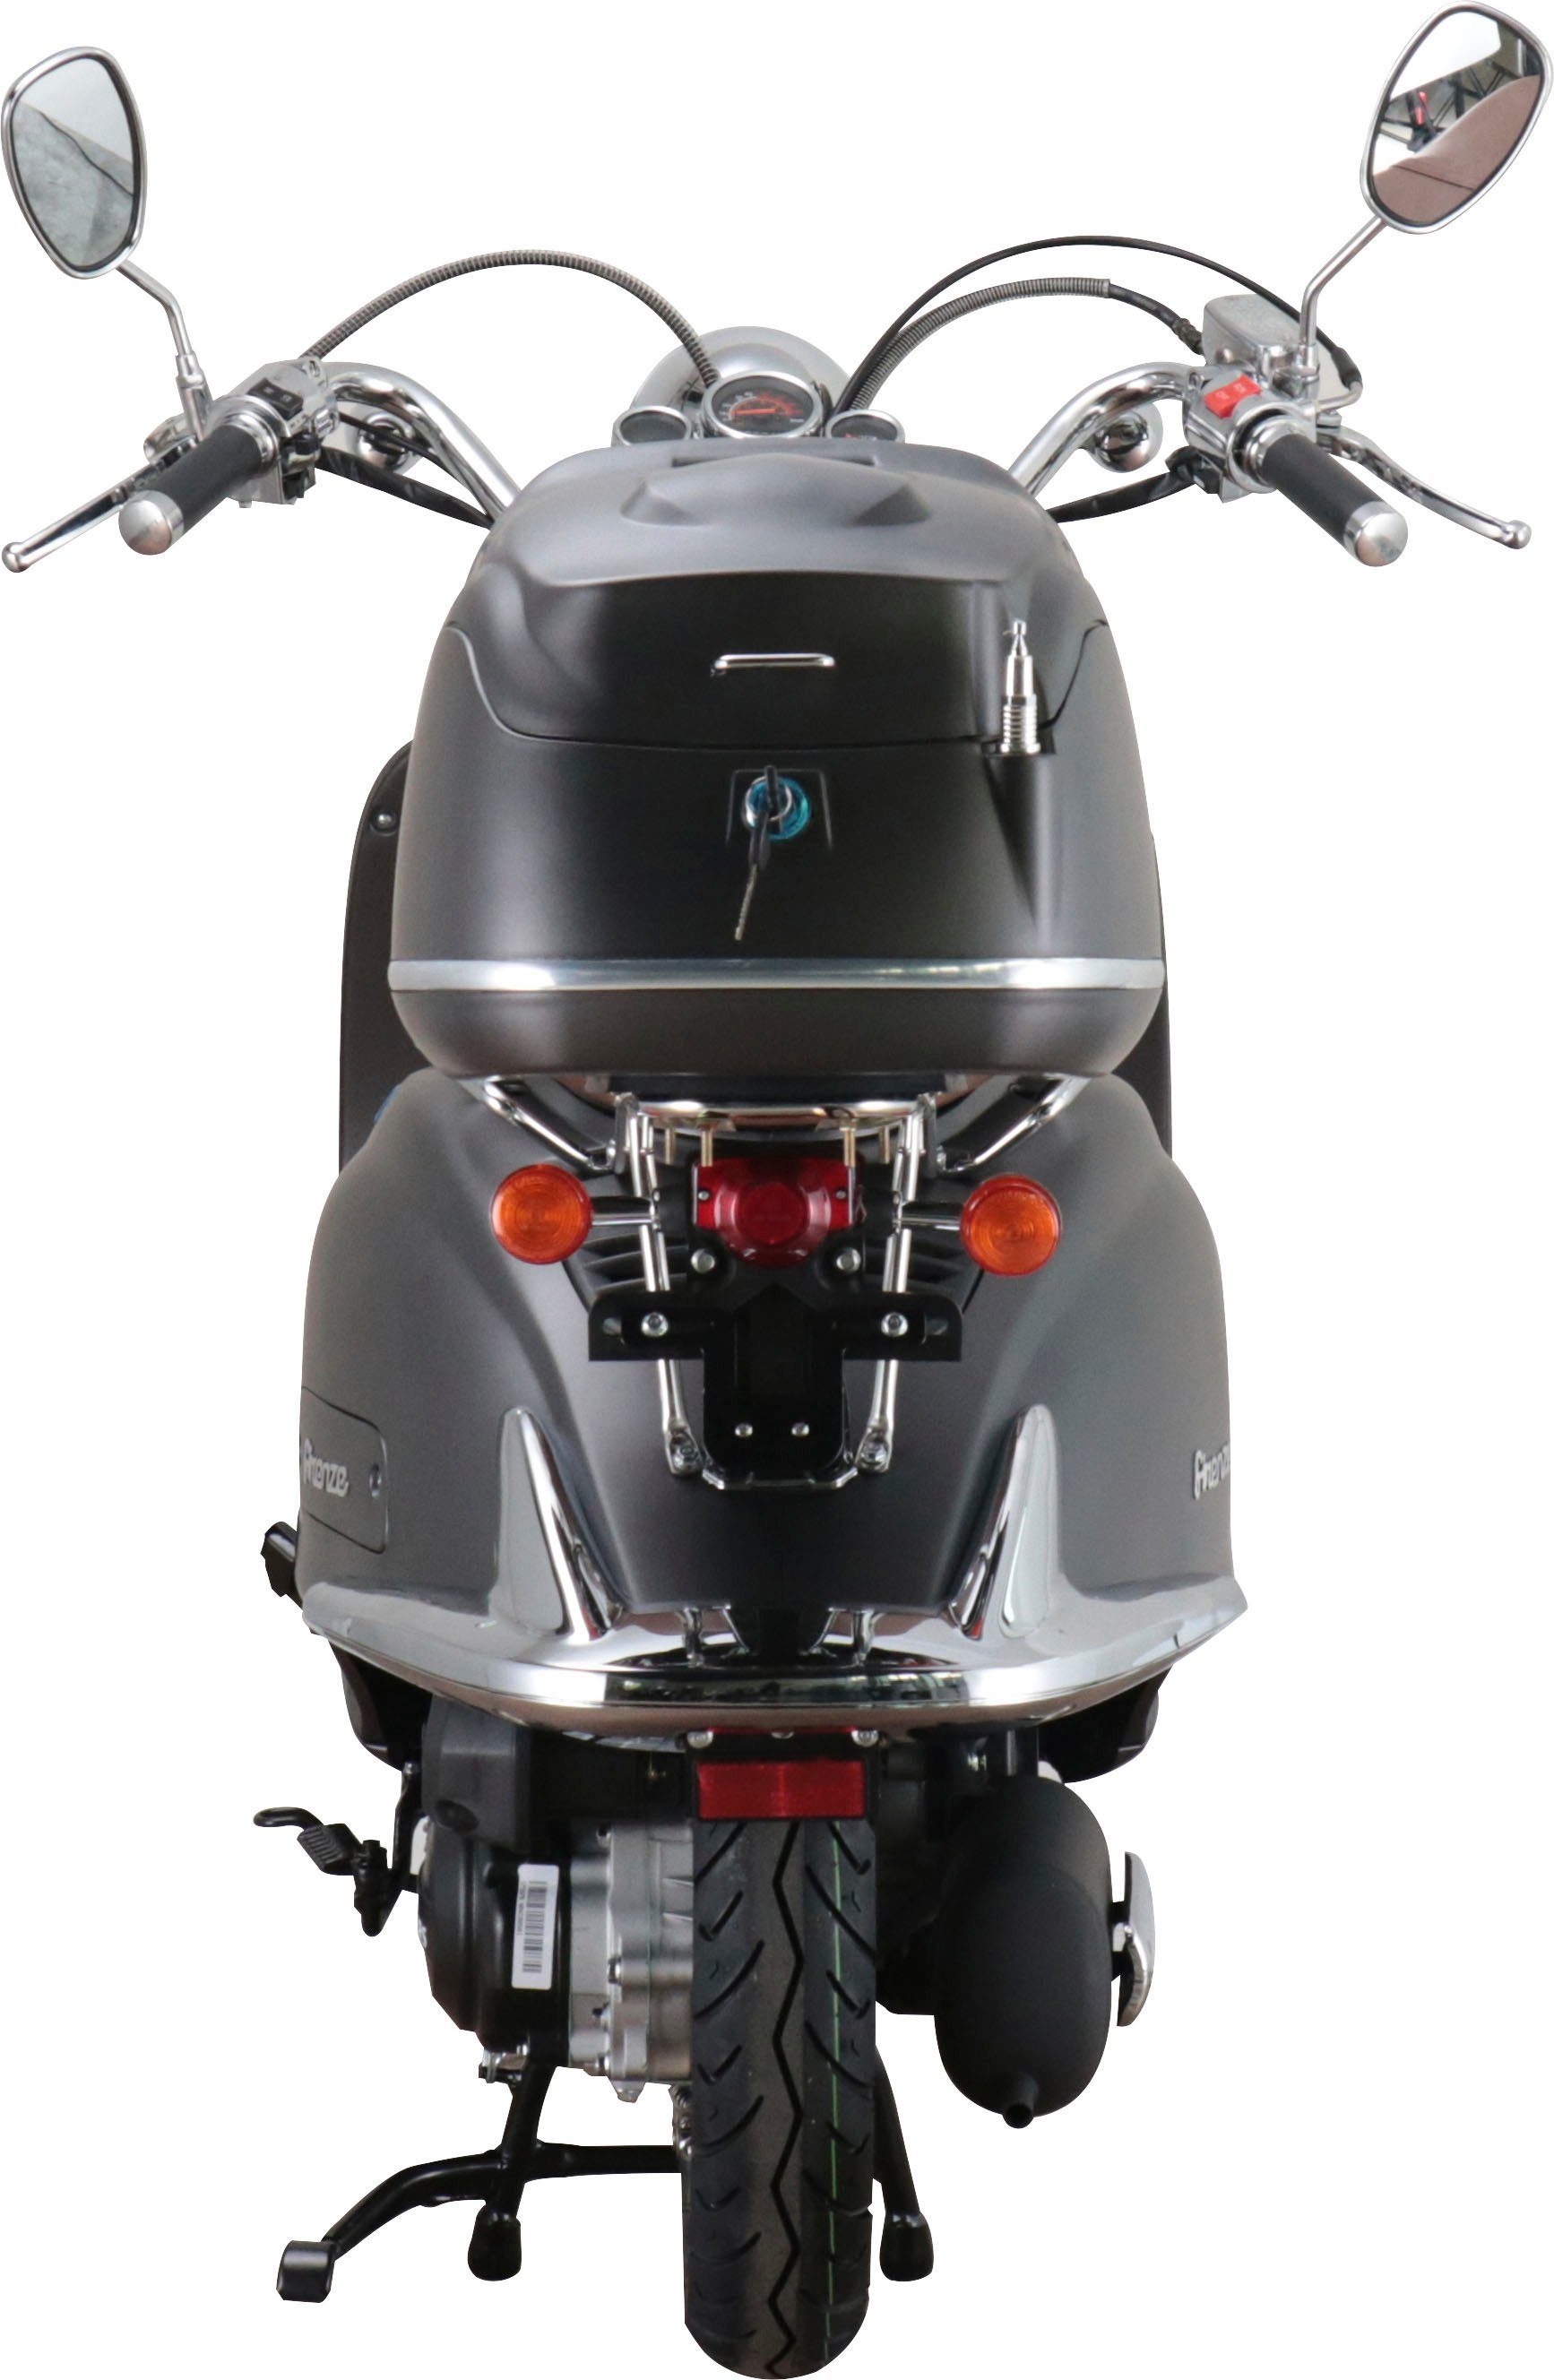 Alpha Motors Motorroller braun mattschwarz Euro inkl. 5, Retro 50 ccm, 45 Firenze, Topcase km/h, 